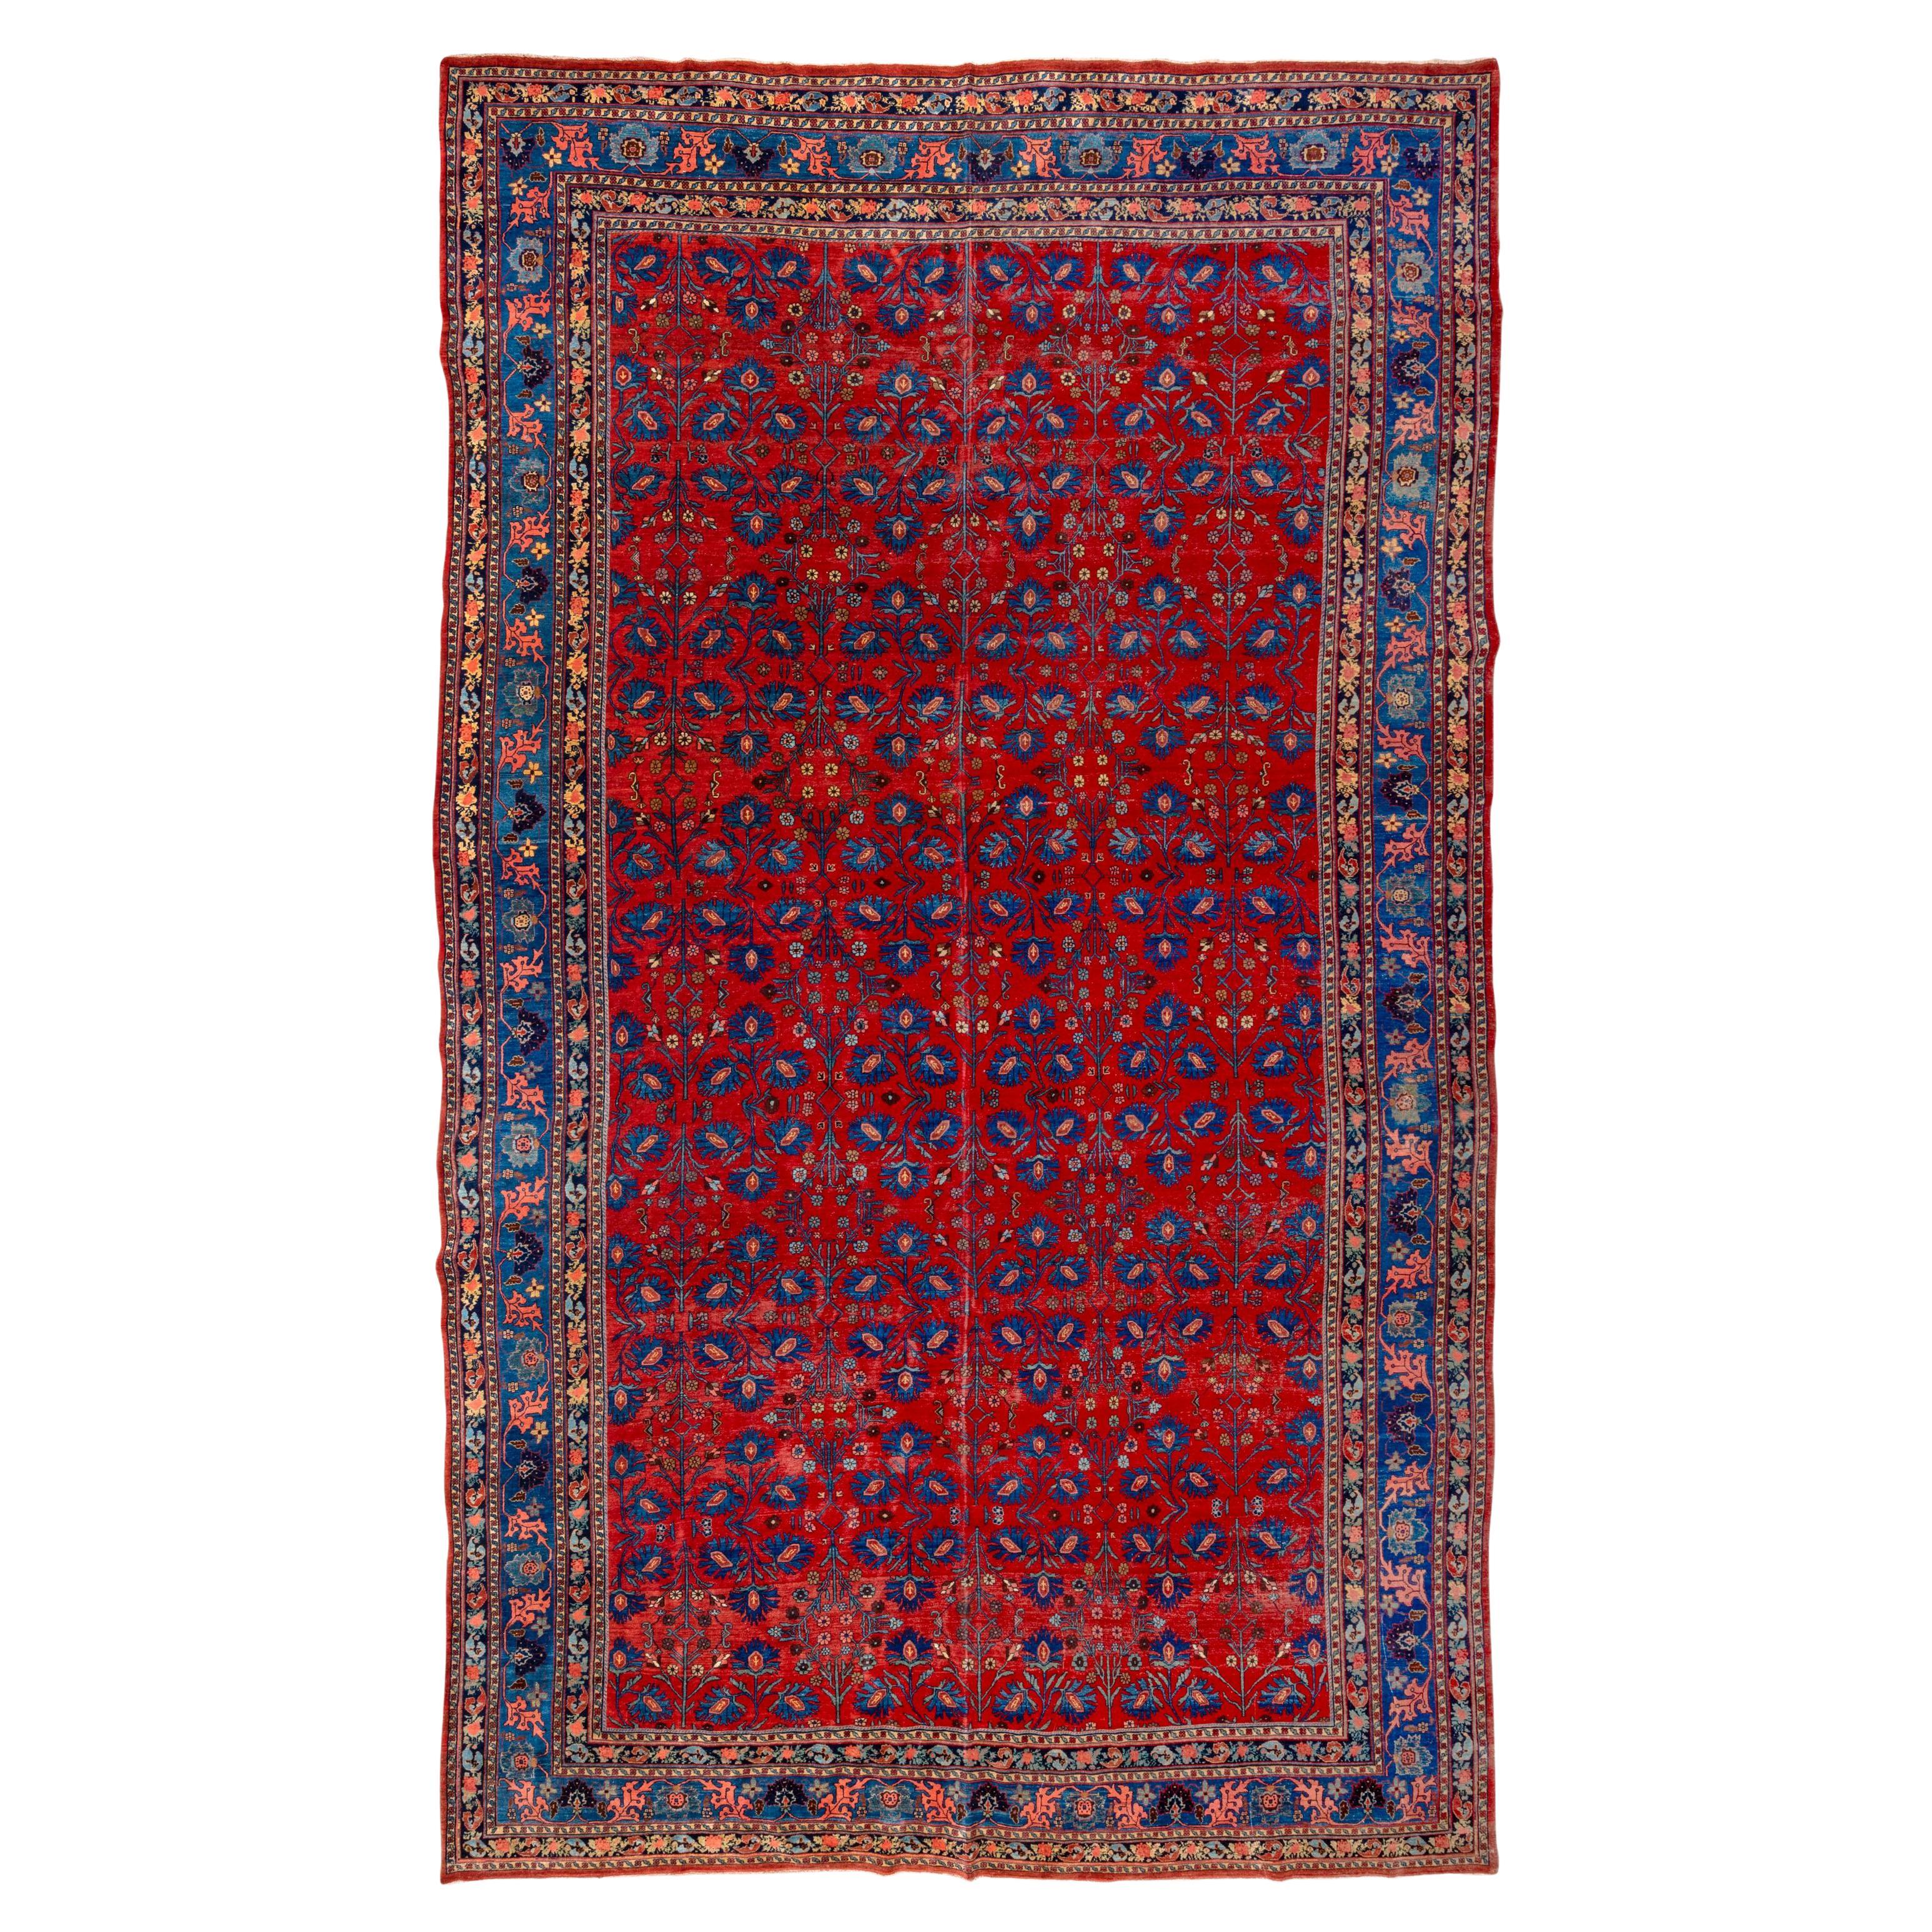 Tapis persan ancien Bidjar aux couleurs vives, vers 1900 en vente